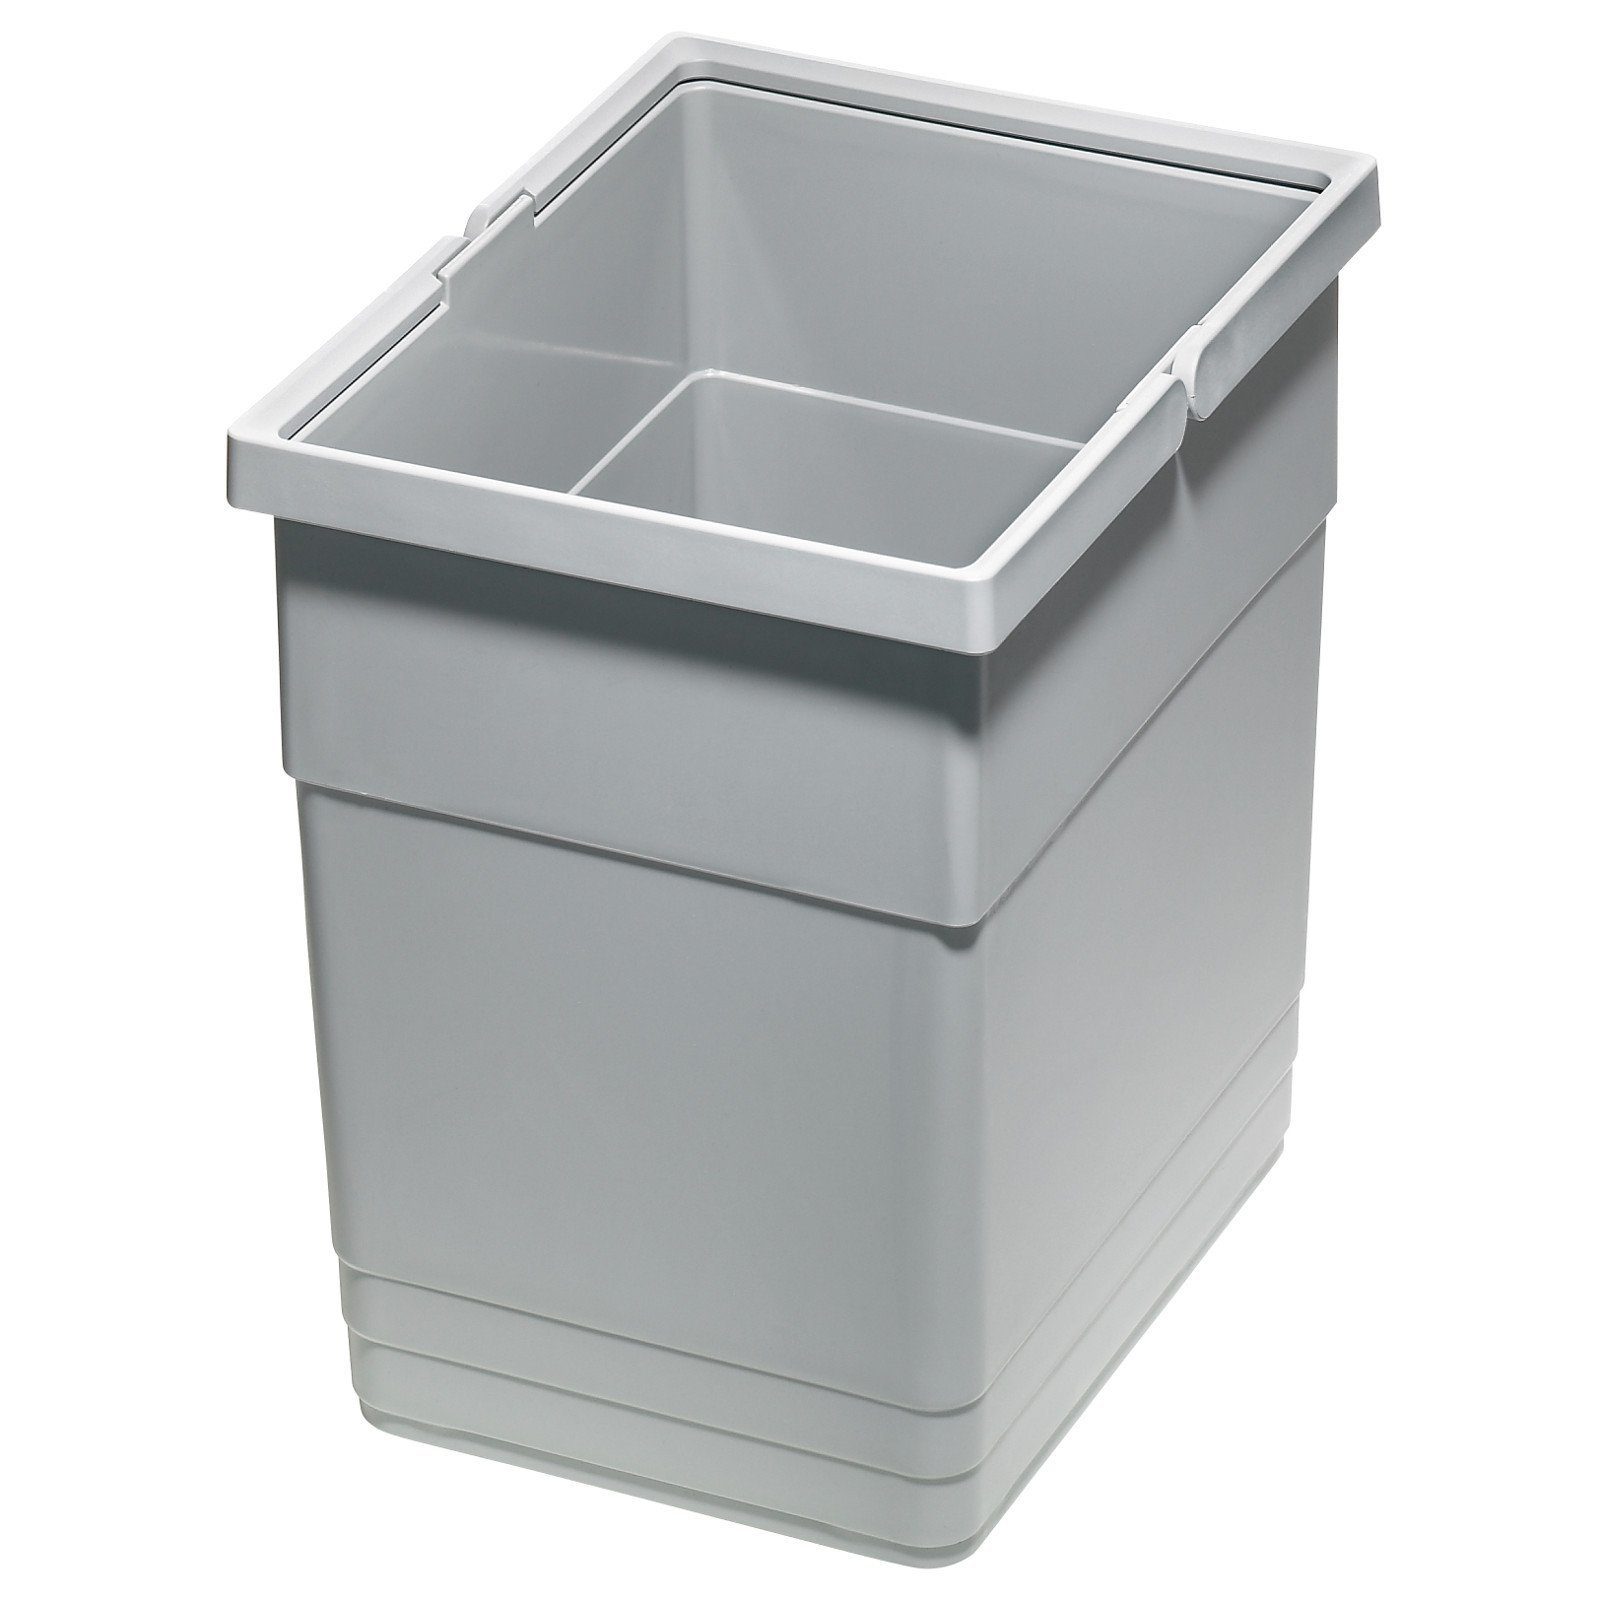 SO-TECH® Mülltrennsystem Abfallsammler Abfalleimer 5136.11 für Abfalltrennsystem eins2vier